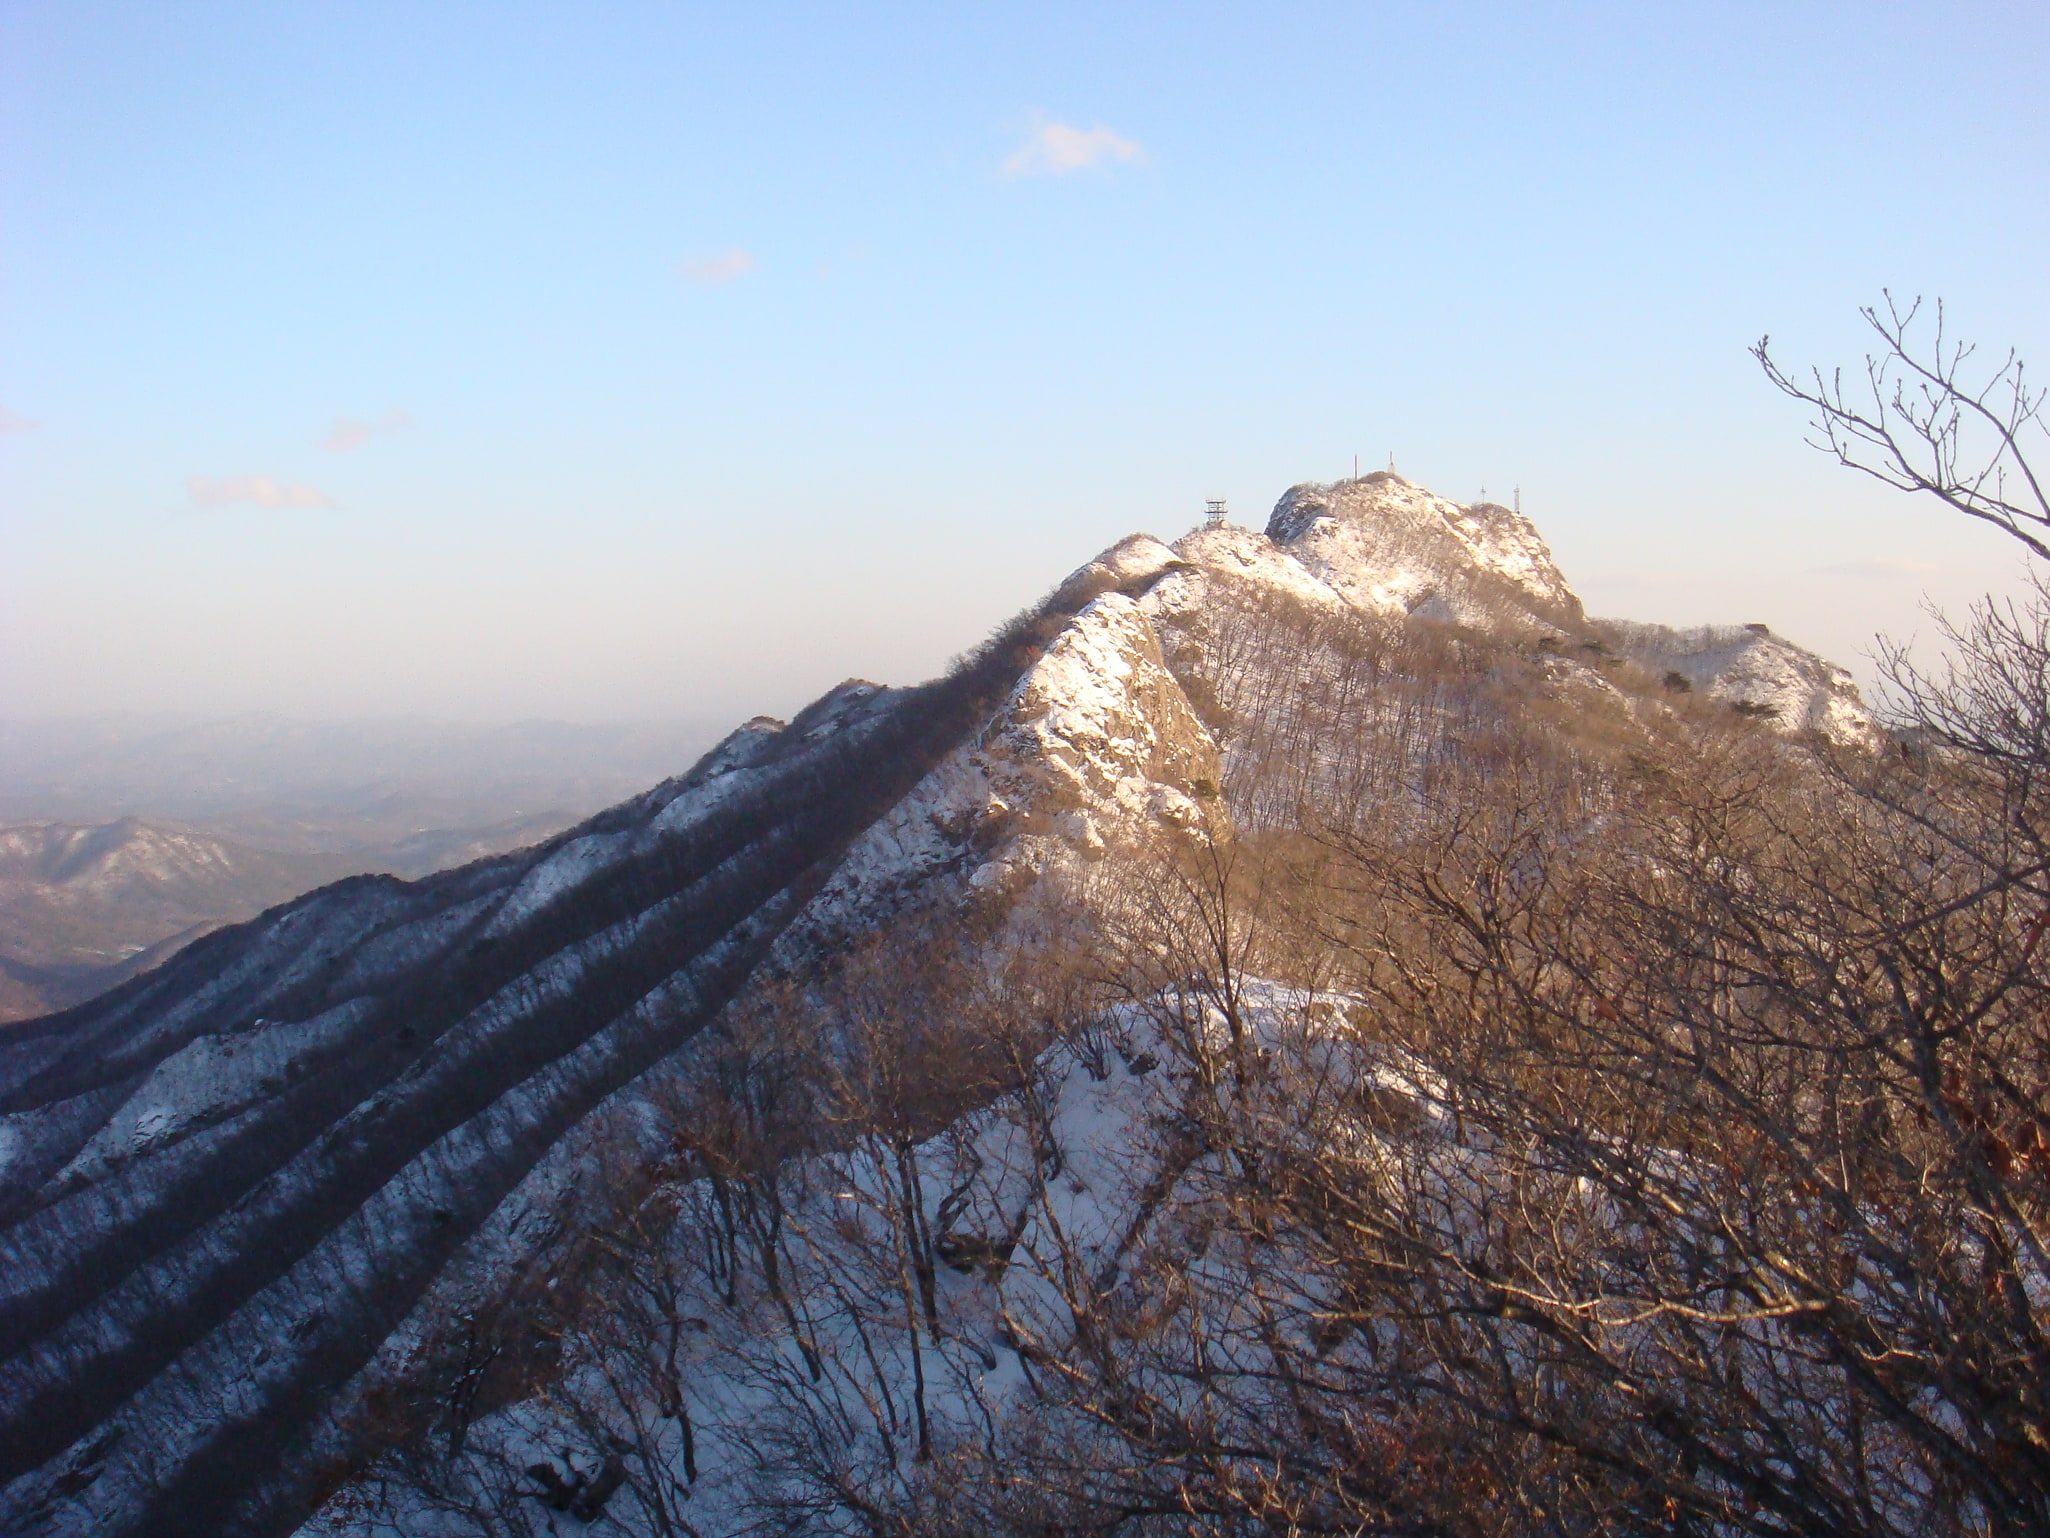 Gyeryongsan National Park, South Korea